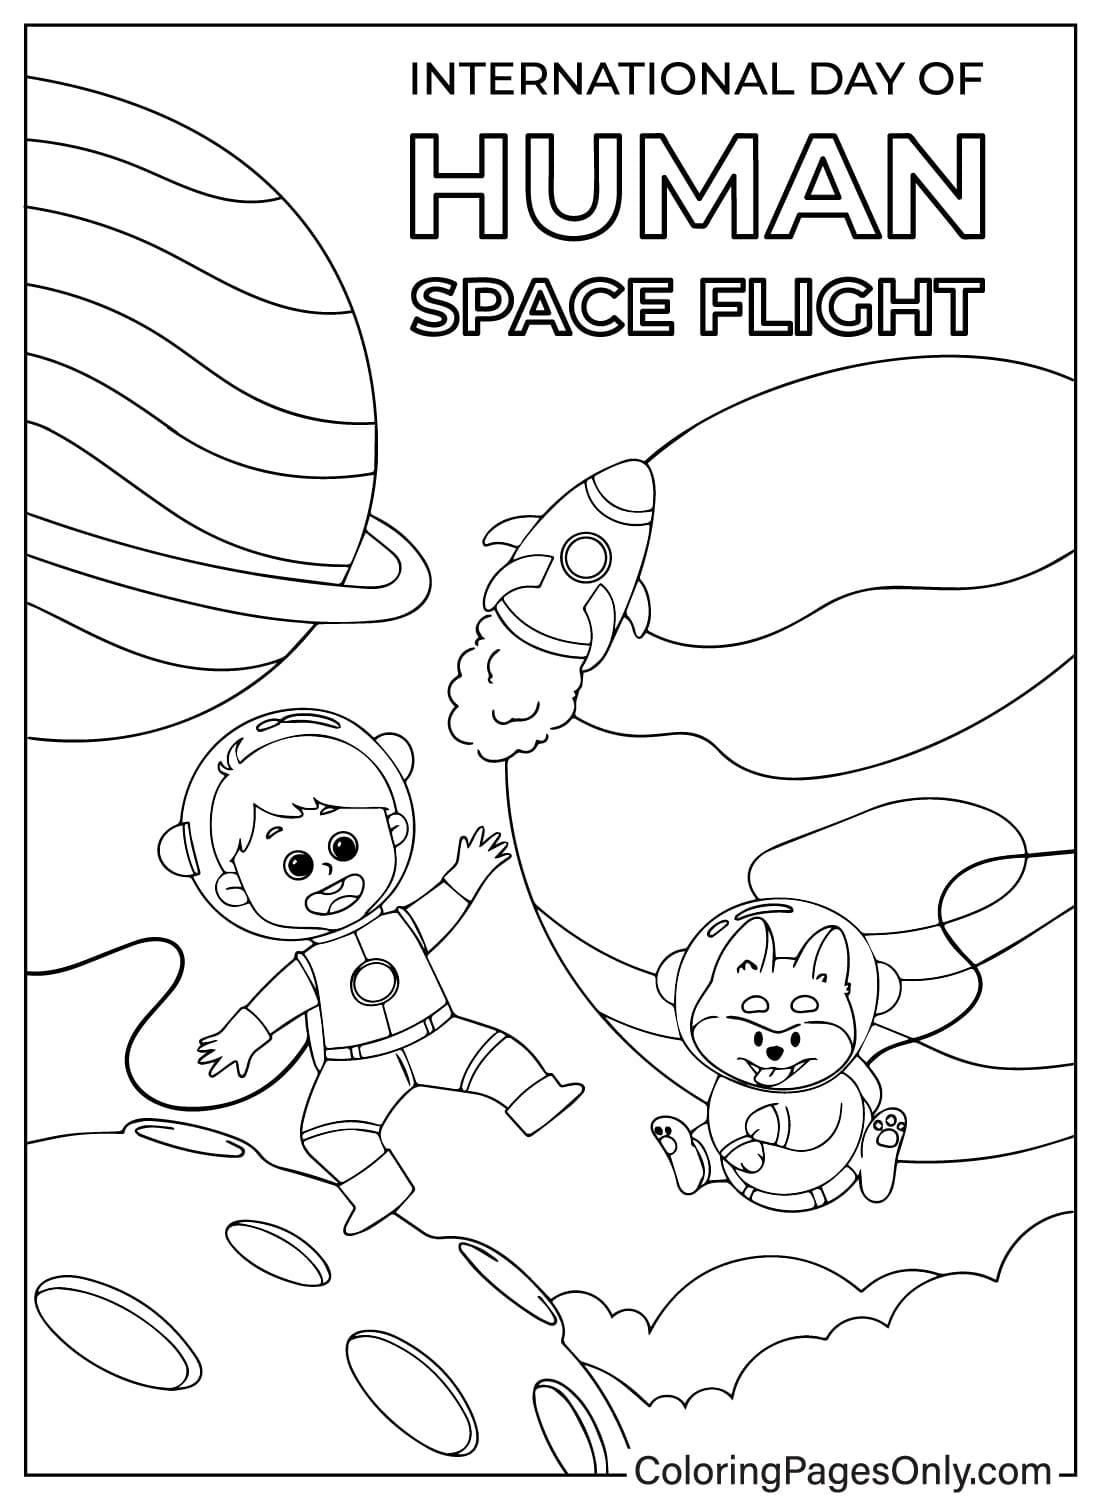 International Day of Human Space Flight Coloring Page PNG from International Day of Human Space Flight